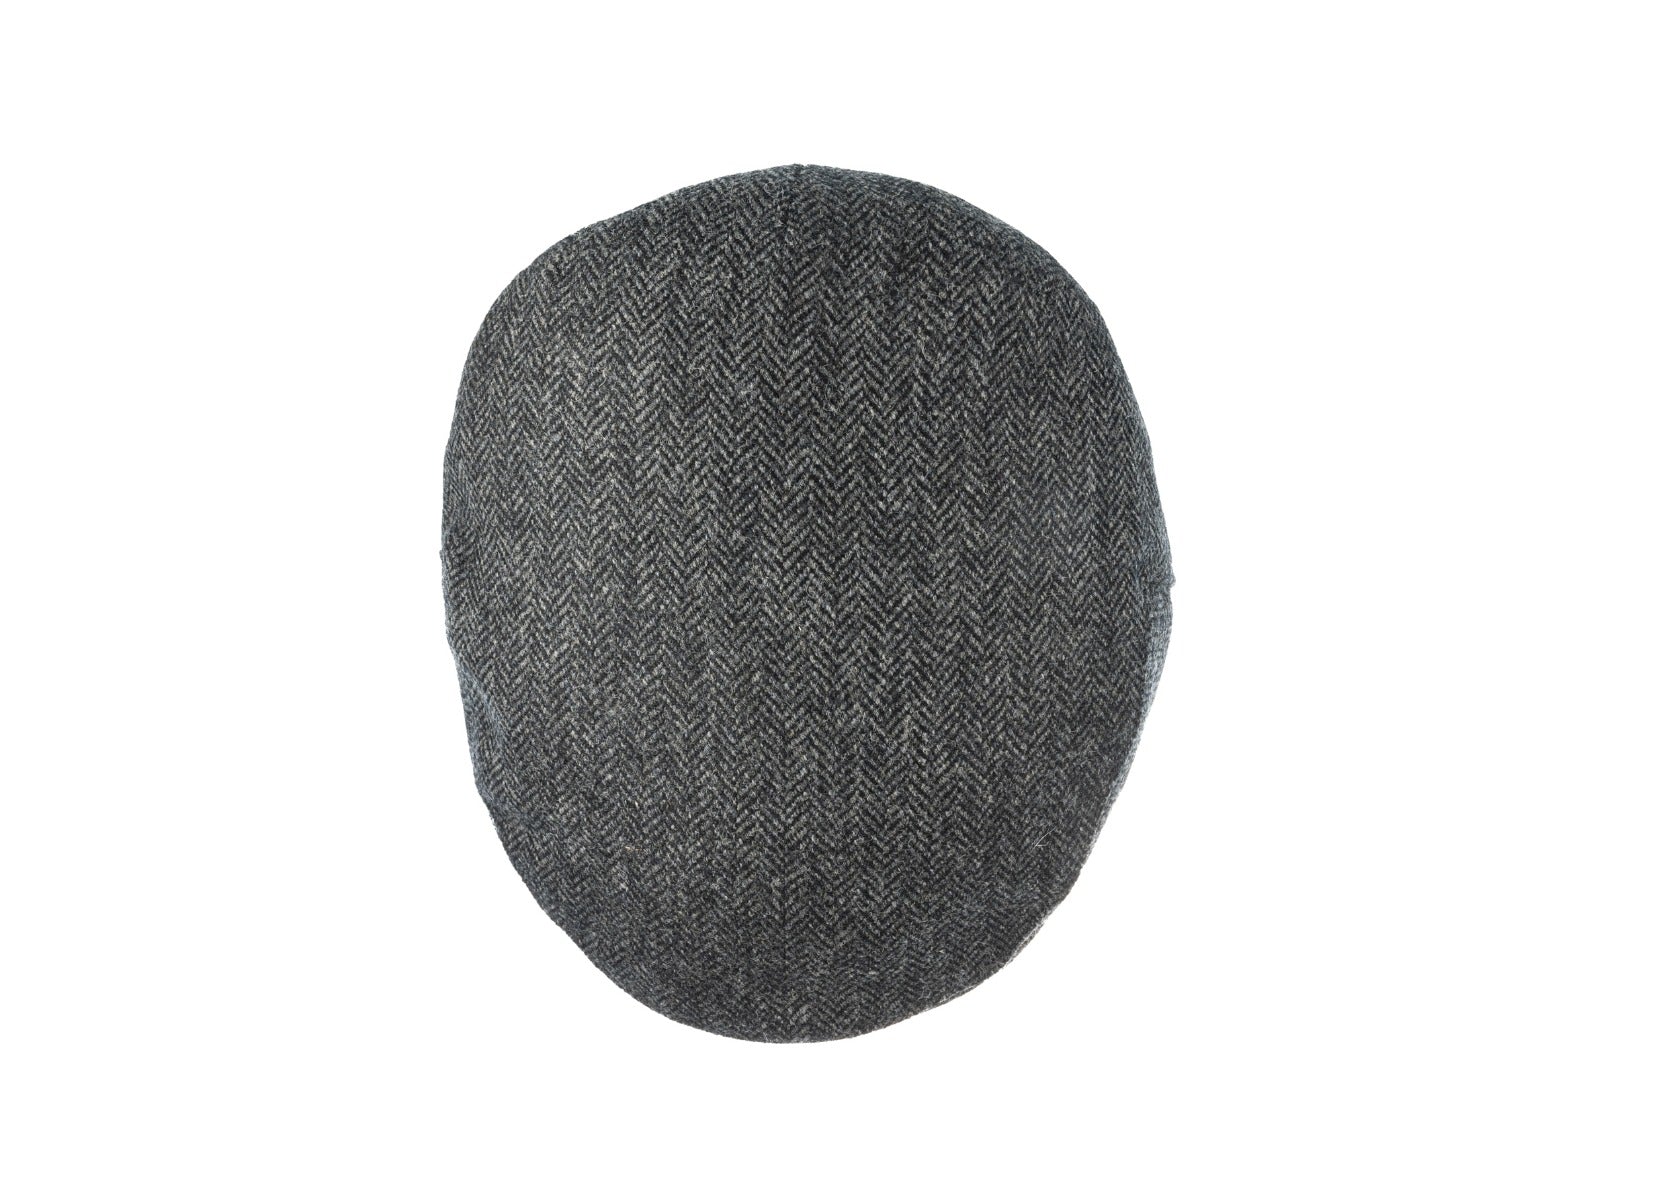 Balmoral Tweed Flat Cap in Z537